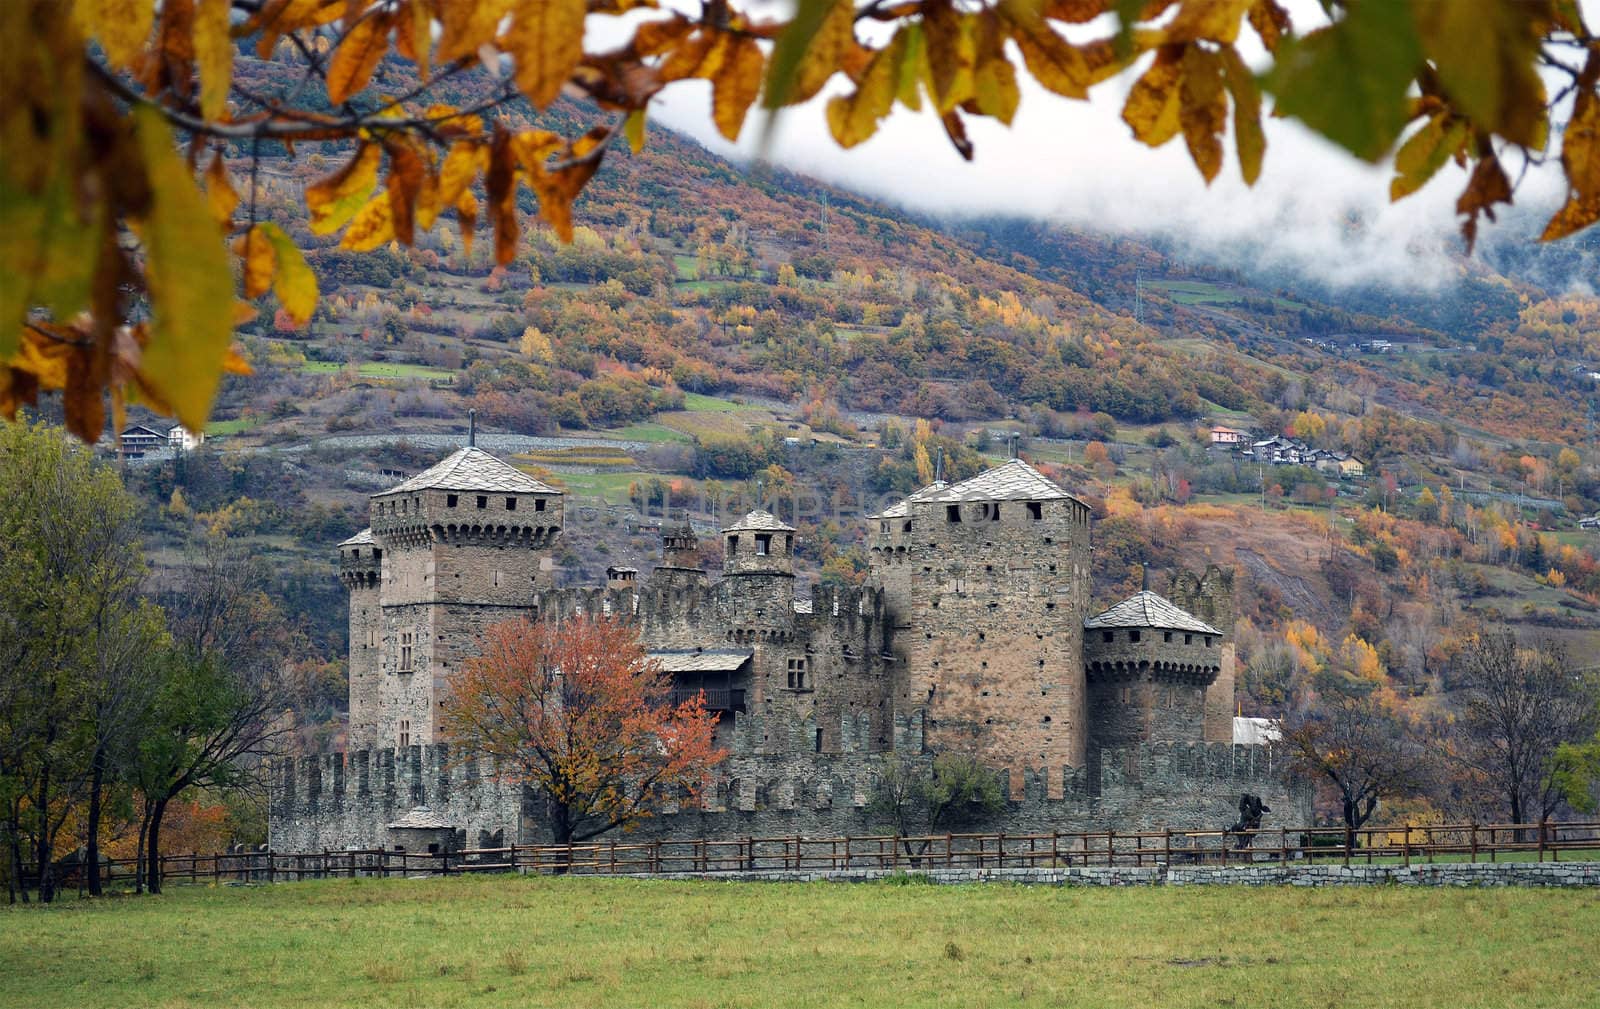 Fenis castle near Aosta (Italy) by artofphoto